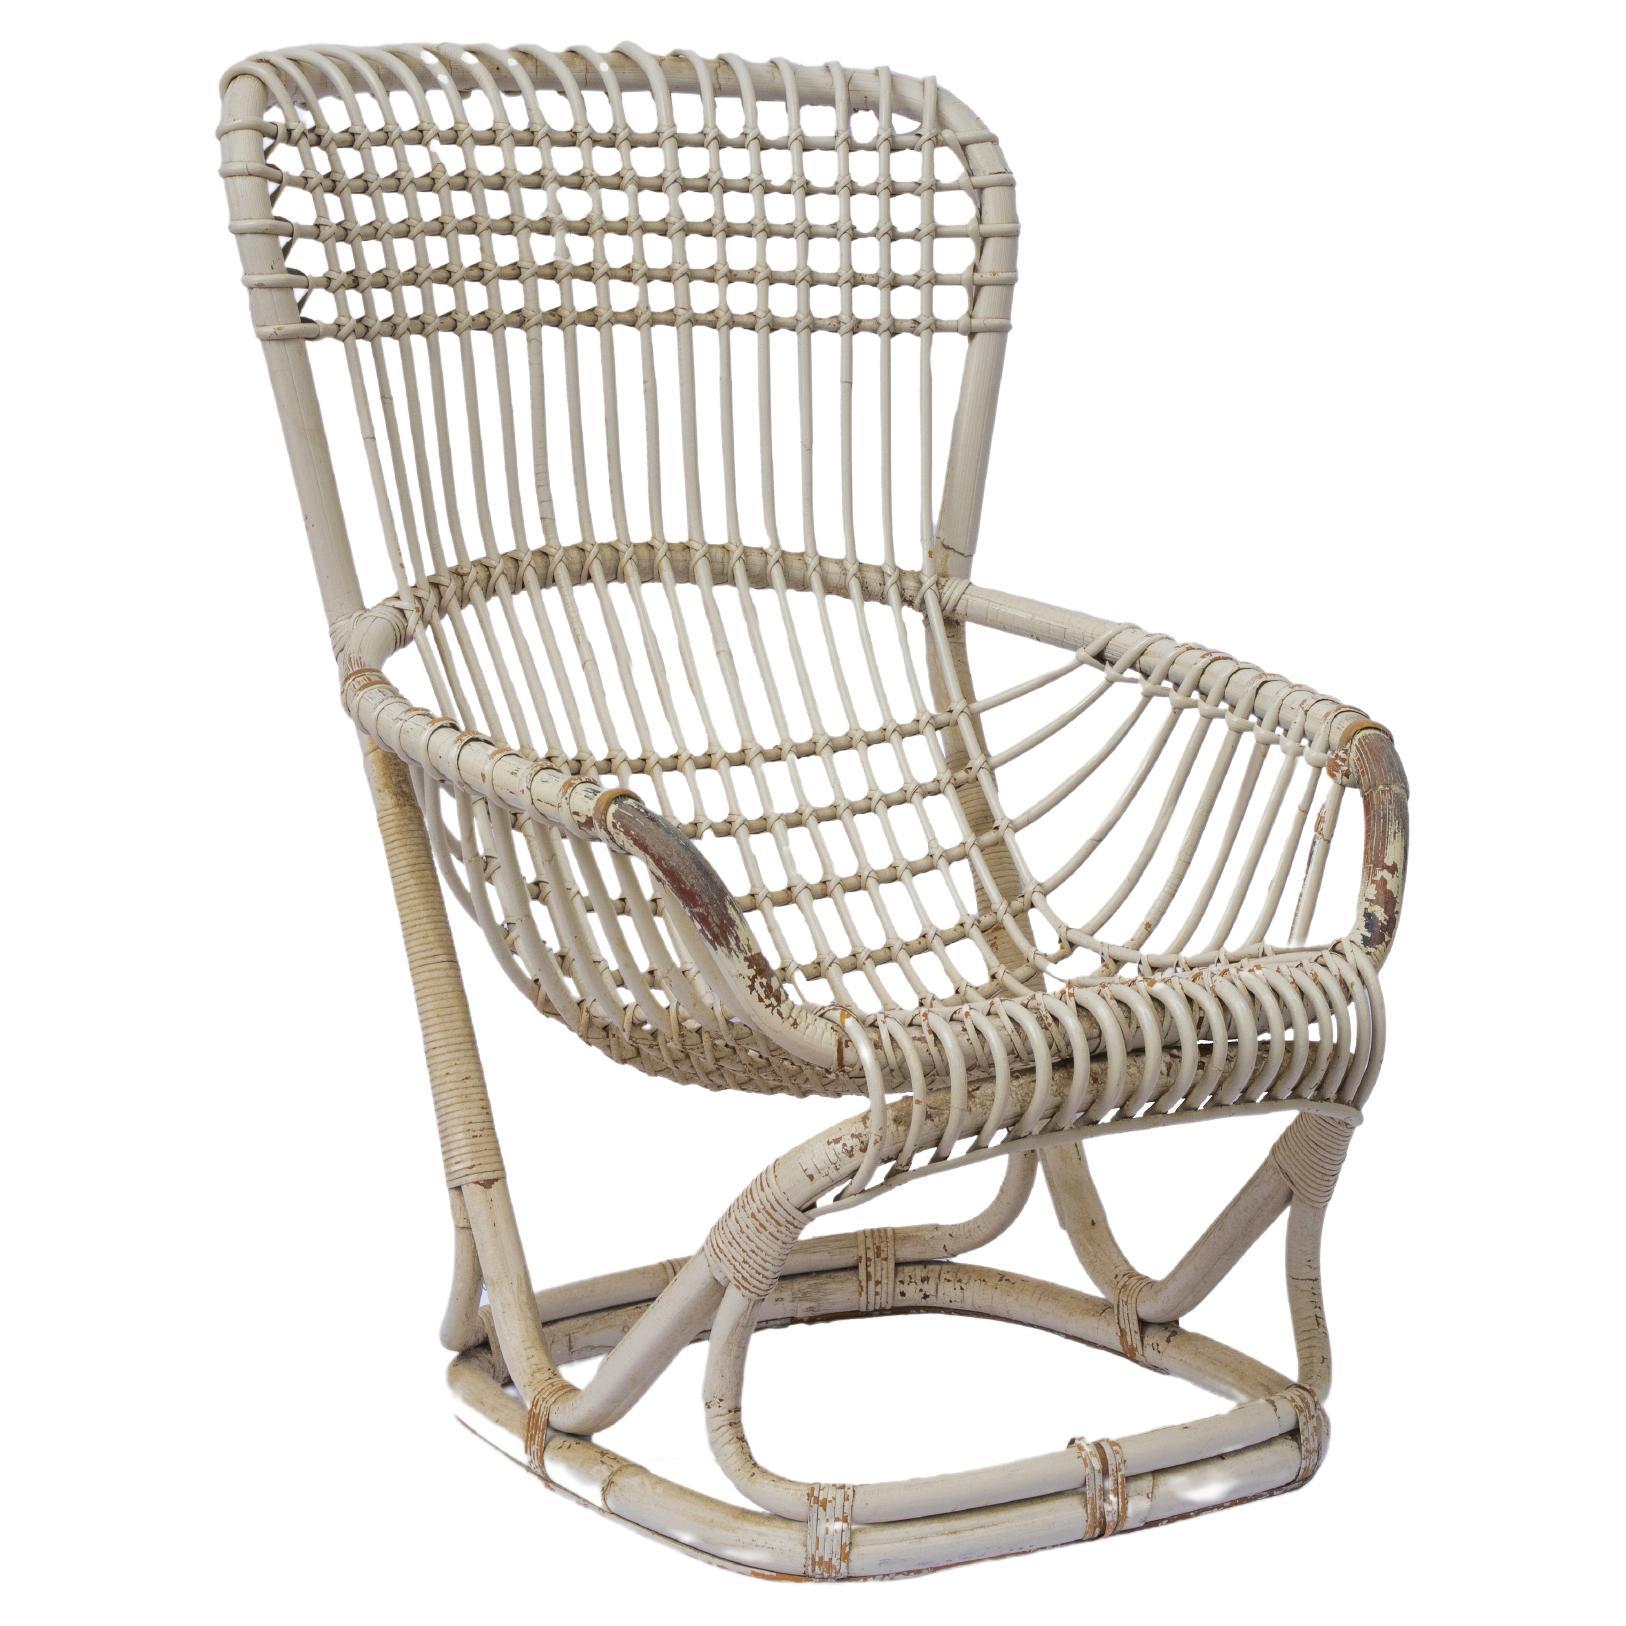 Tito Agnoli BP4 rattan chair, made by Pierantonio Bonacina, Italy 1959